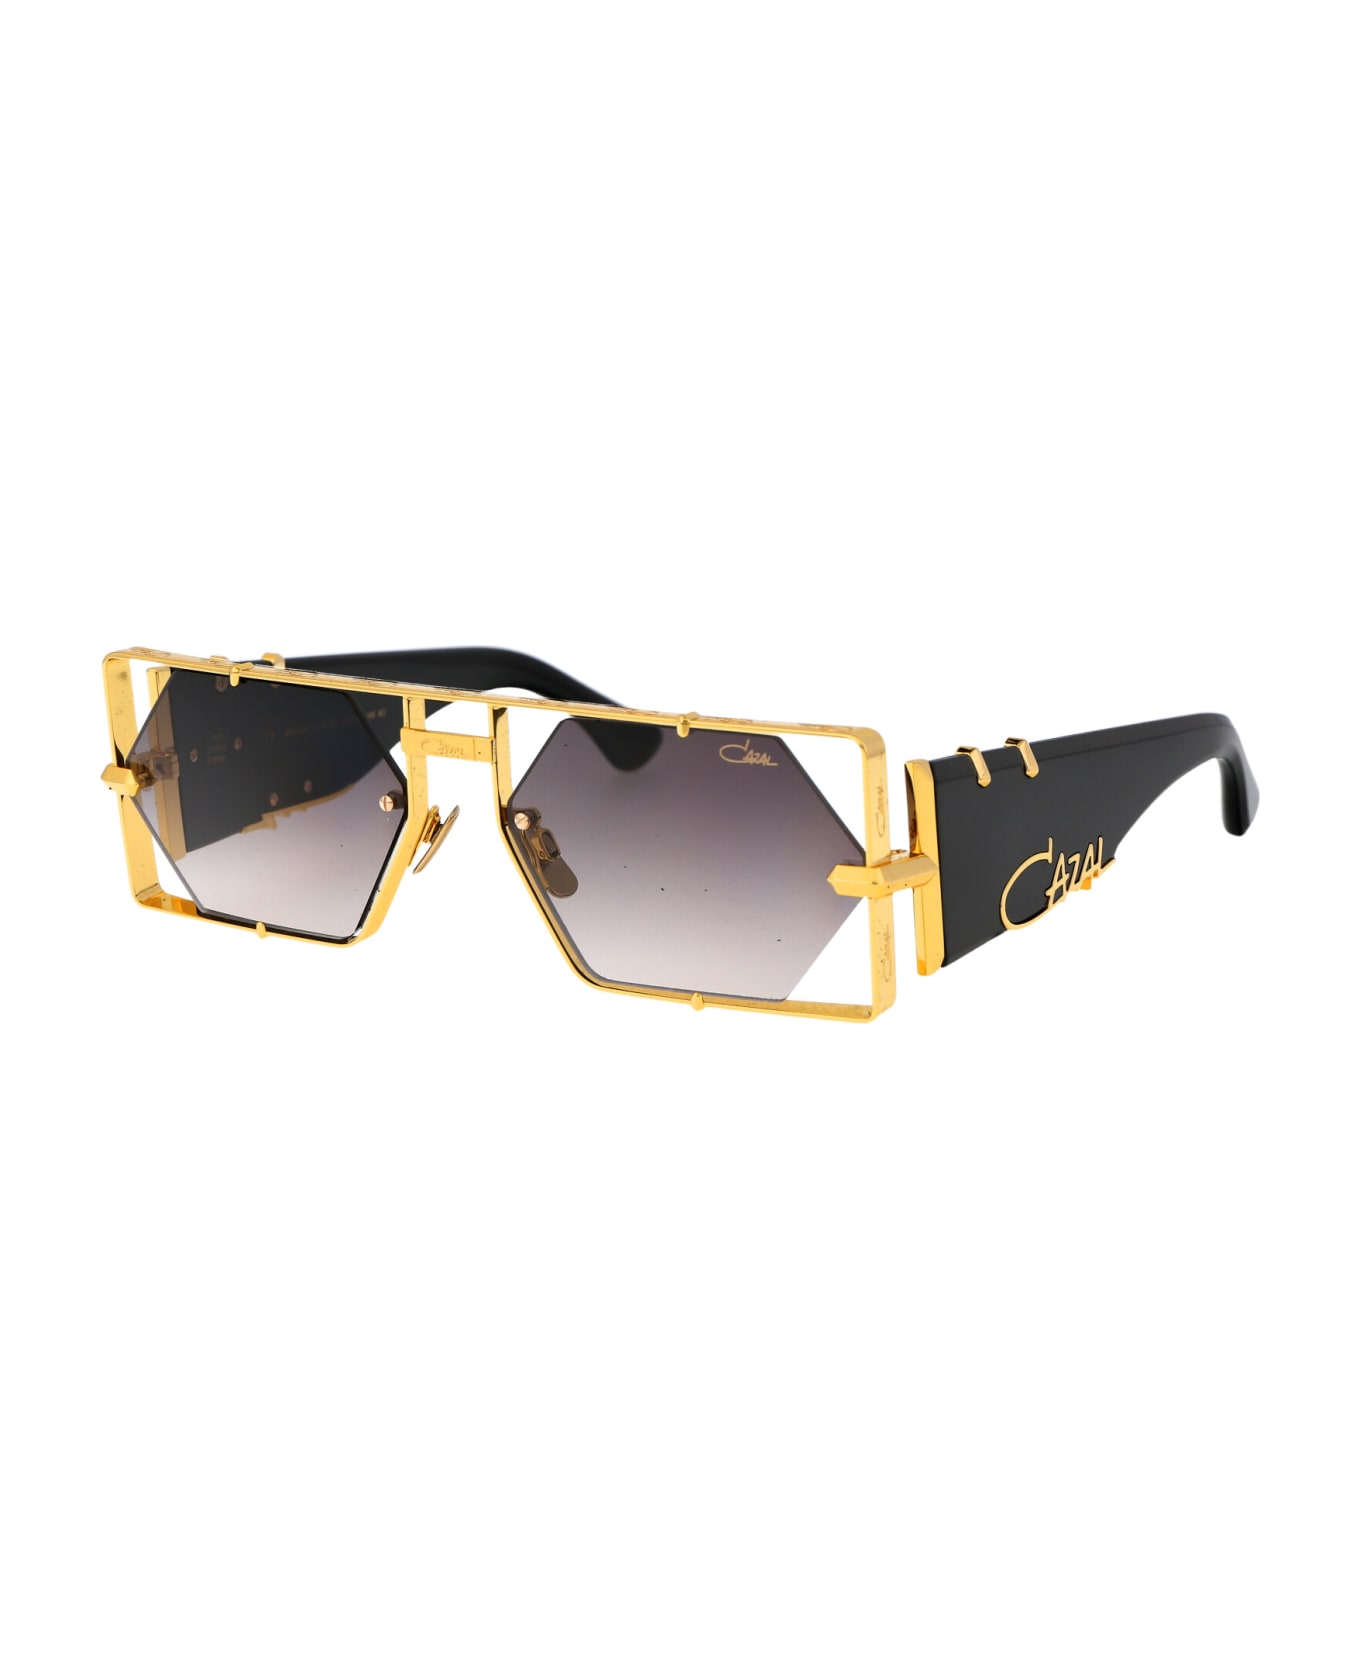 Cazal Mod. 004 Sunglasses - 001 GOLD BLACK  サングラス